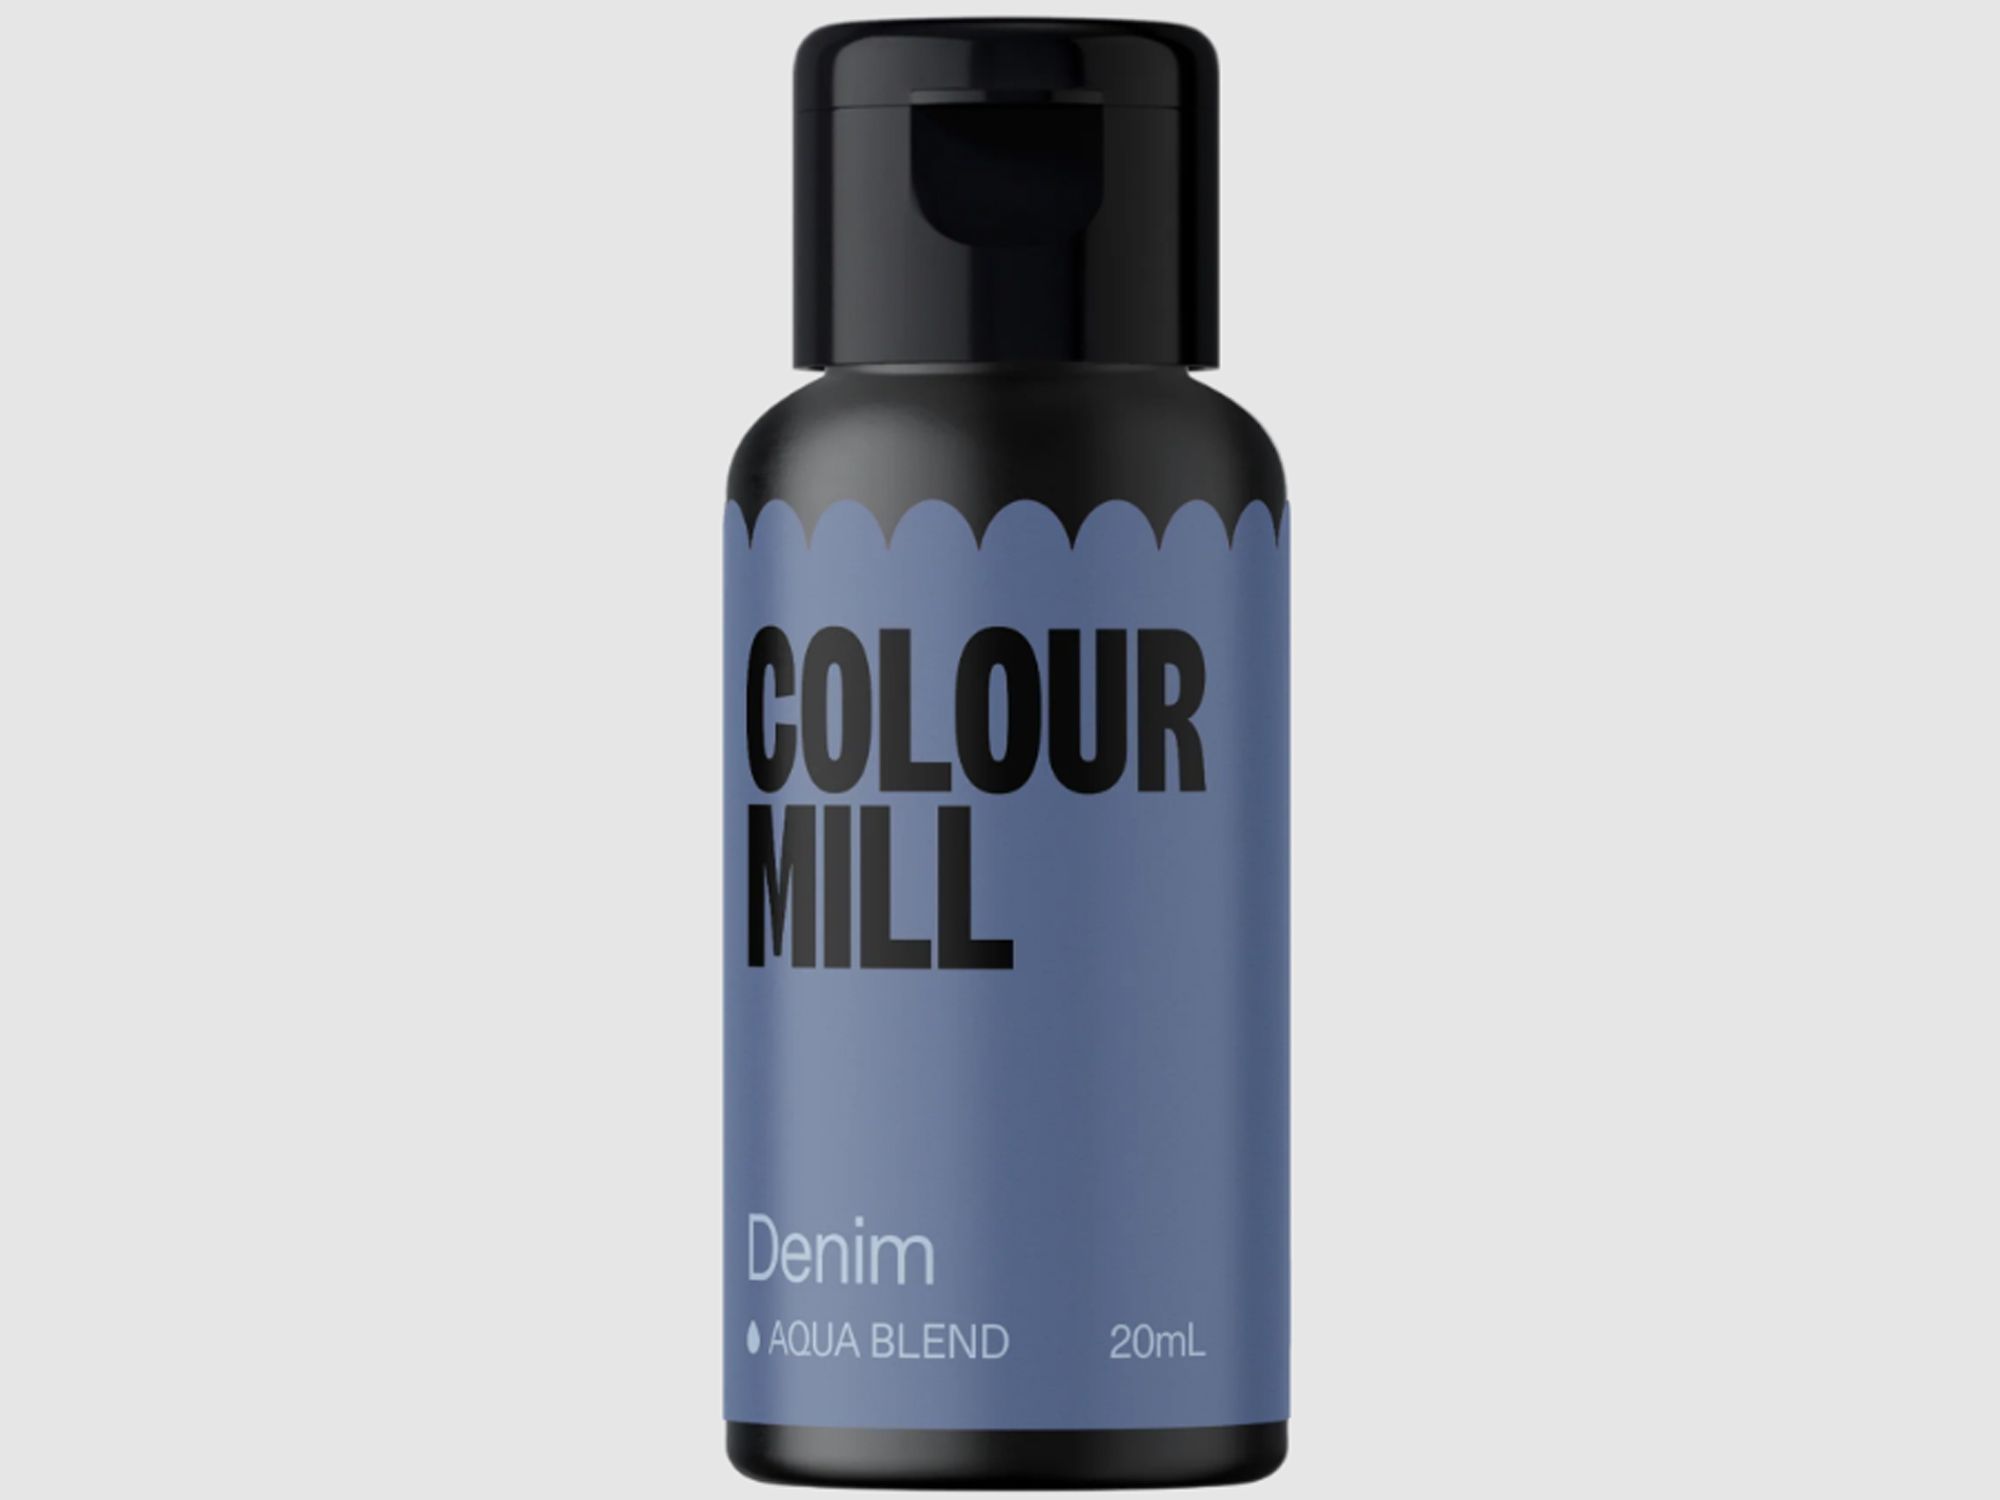 Colour Mill Denim (Aqua Blend) 20ml